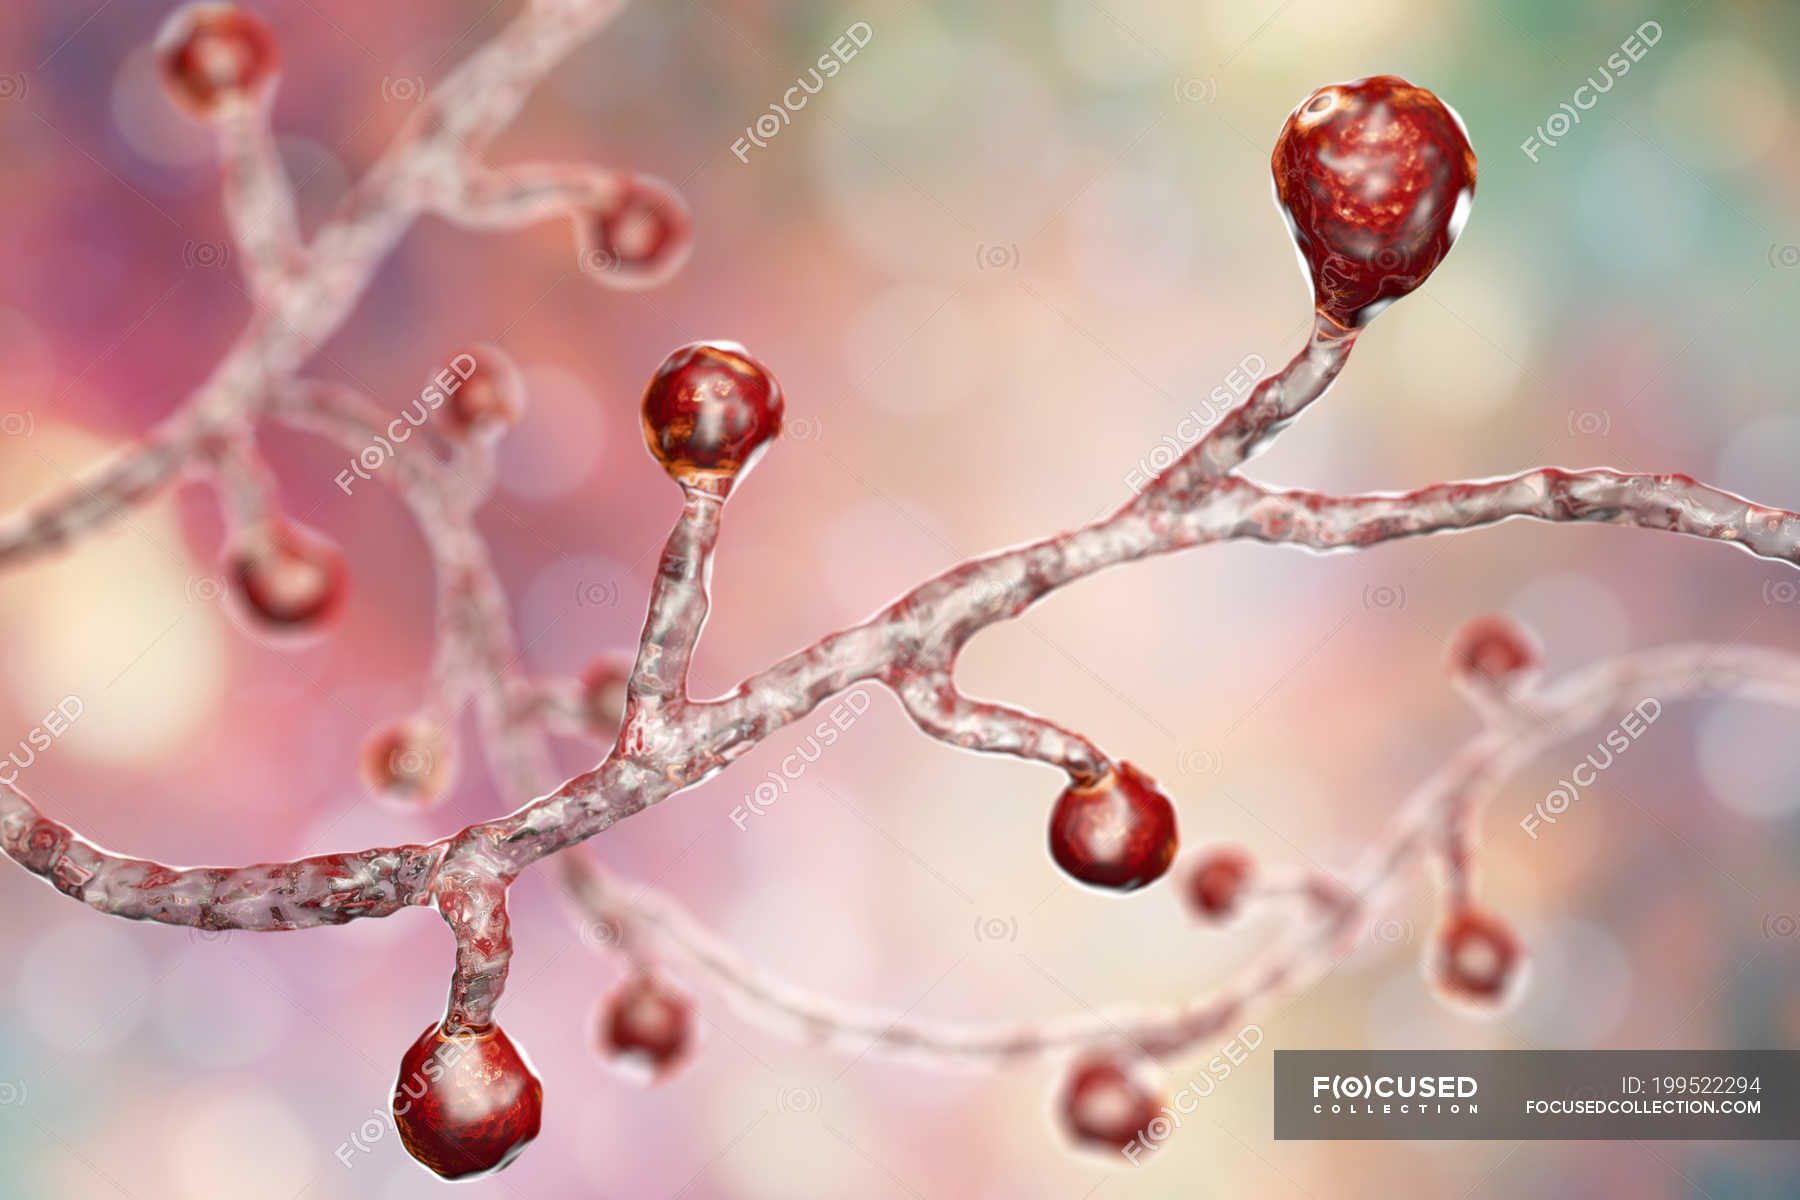 Colored Digital Illustration Of Blastomyces Dermatitidis Fungus Causing Fungal Infection 